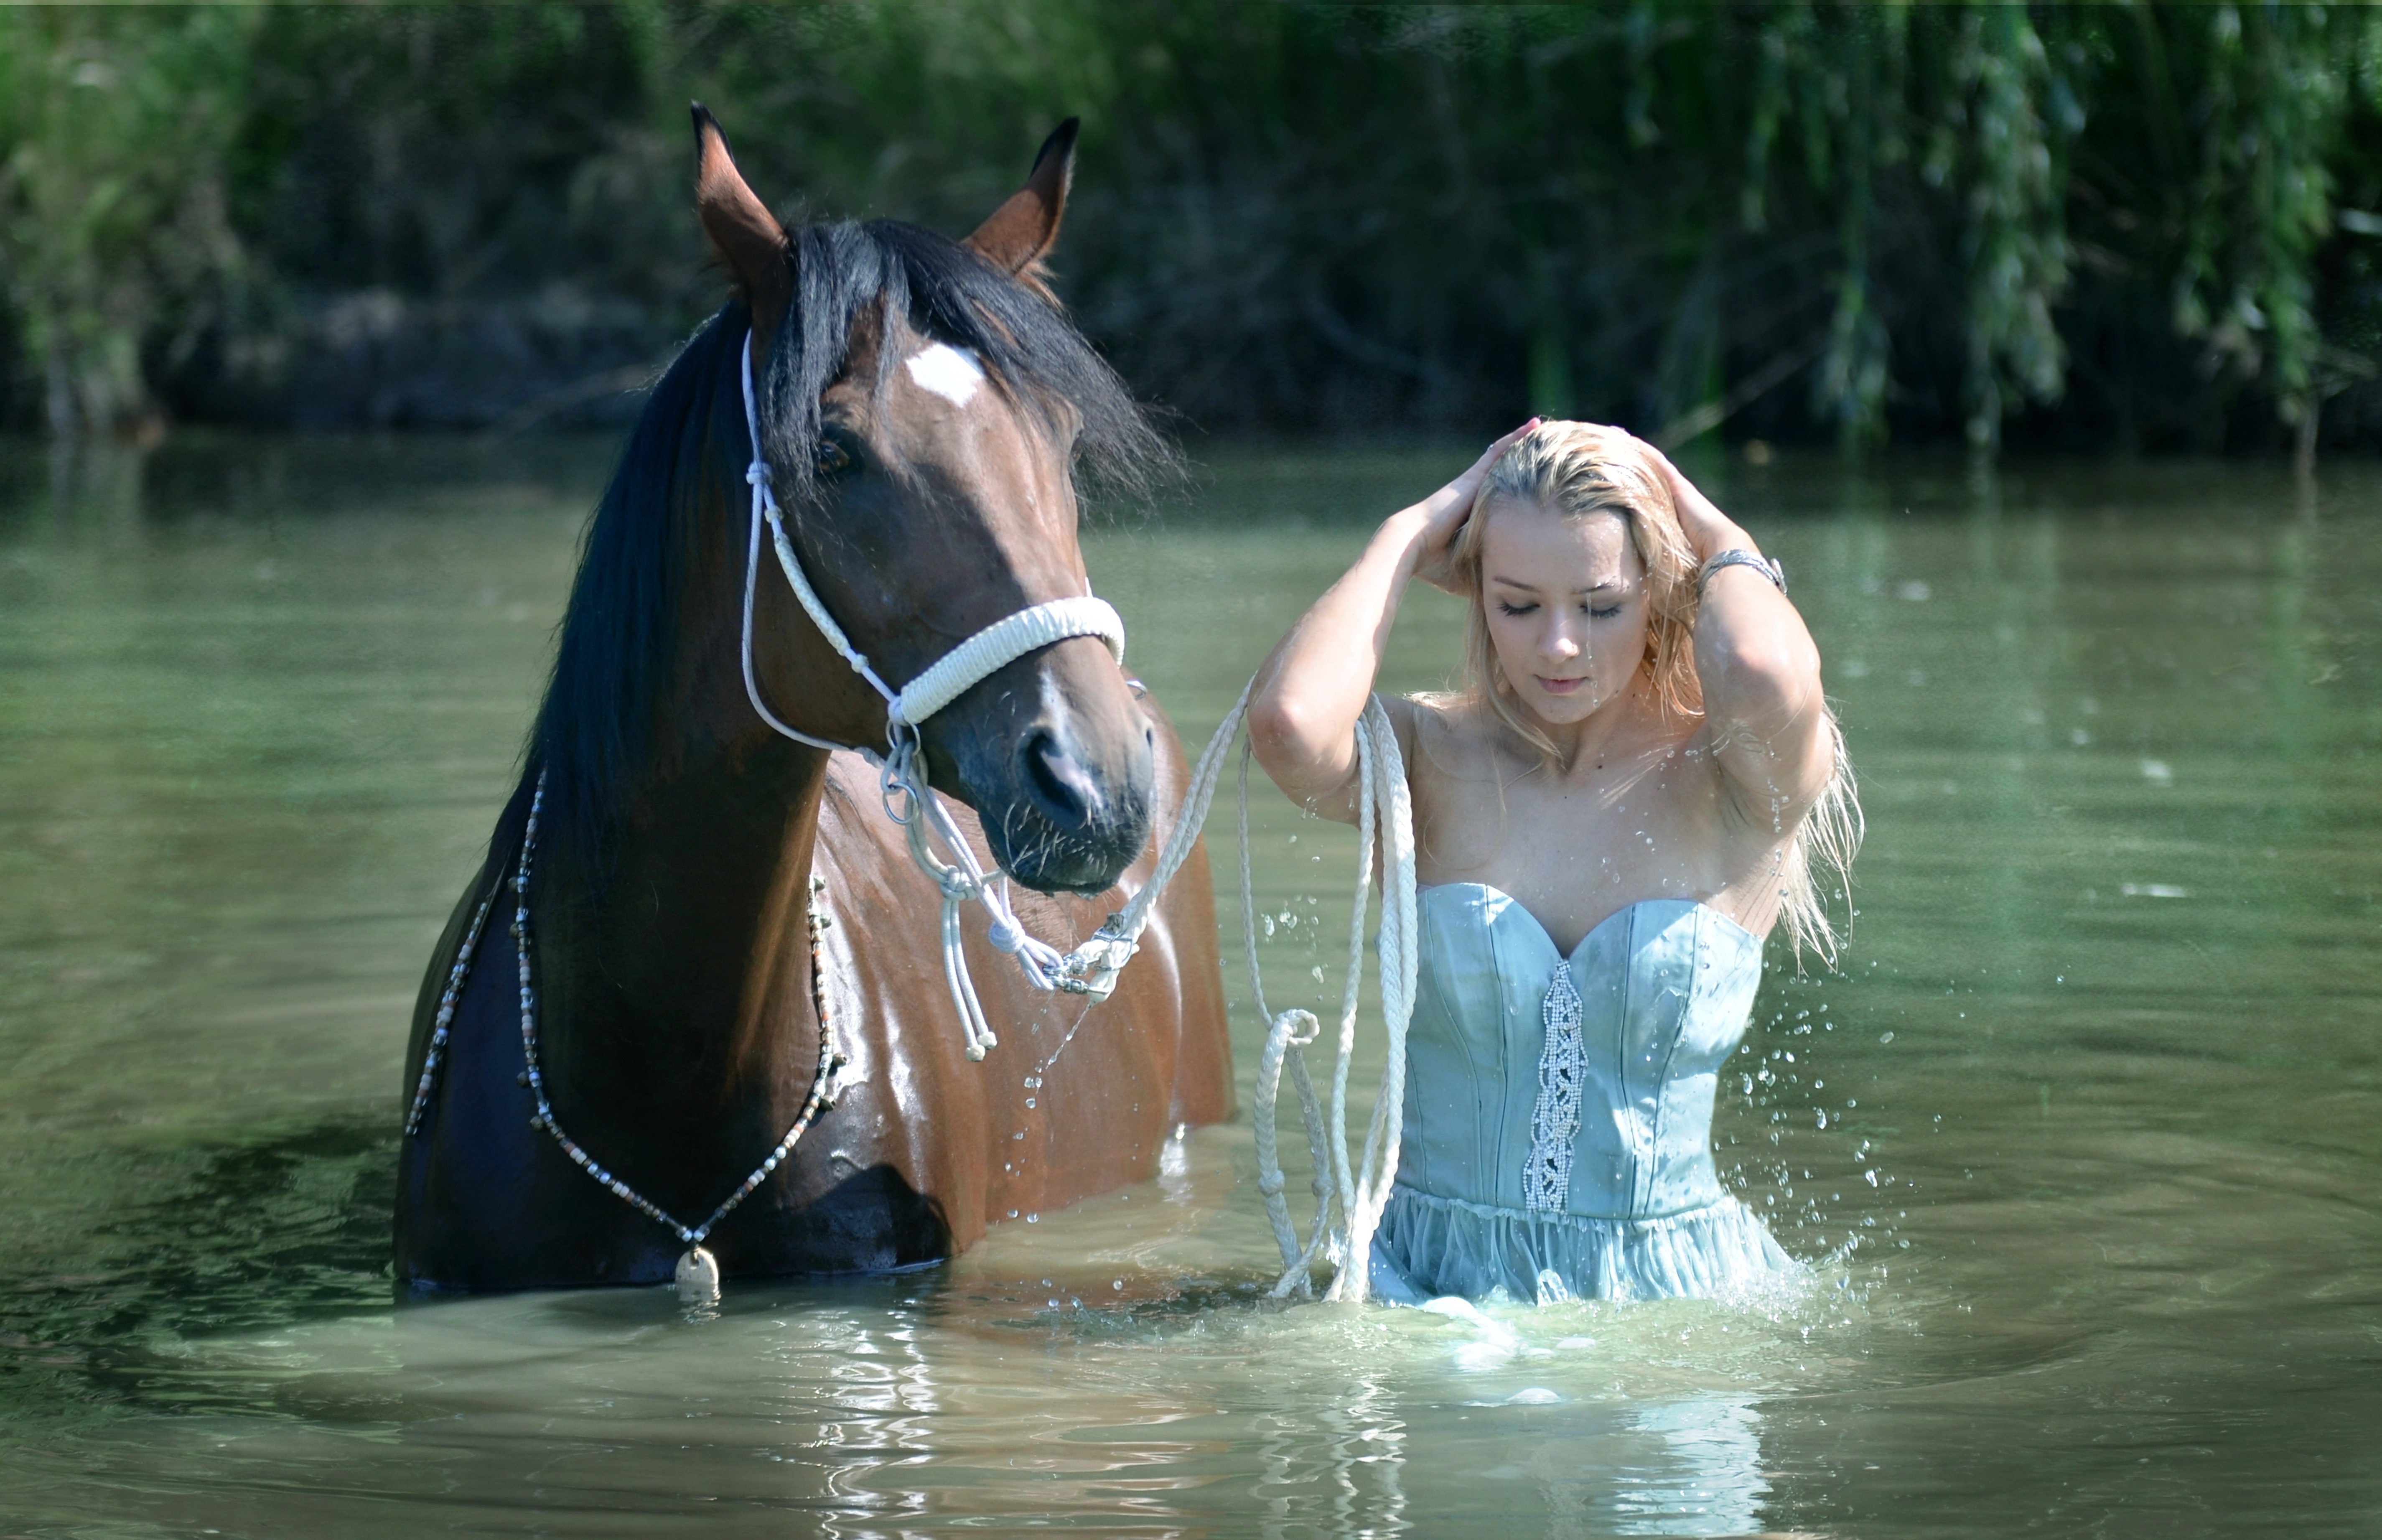 Хорс видео. Лошади в воде. Девушка с лошадью. Фотосессия с лошадью в воде. Девушка на коне.